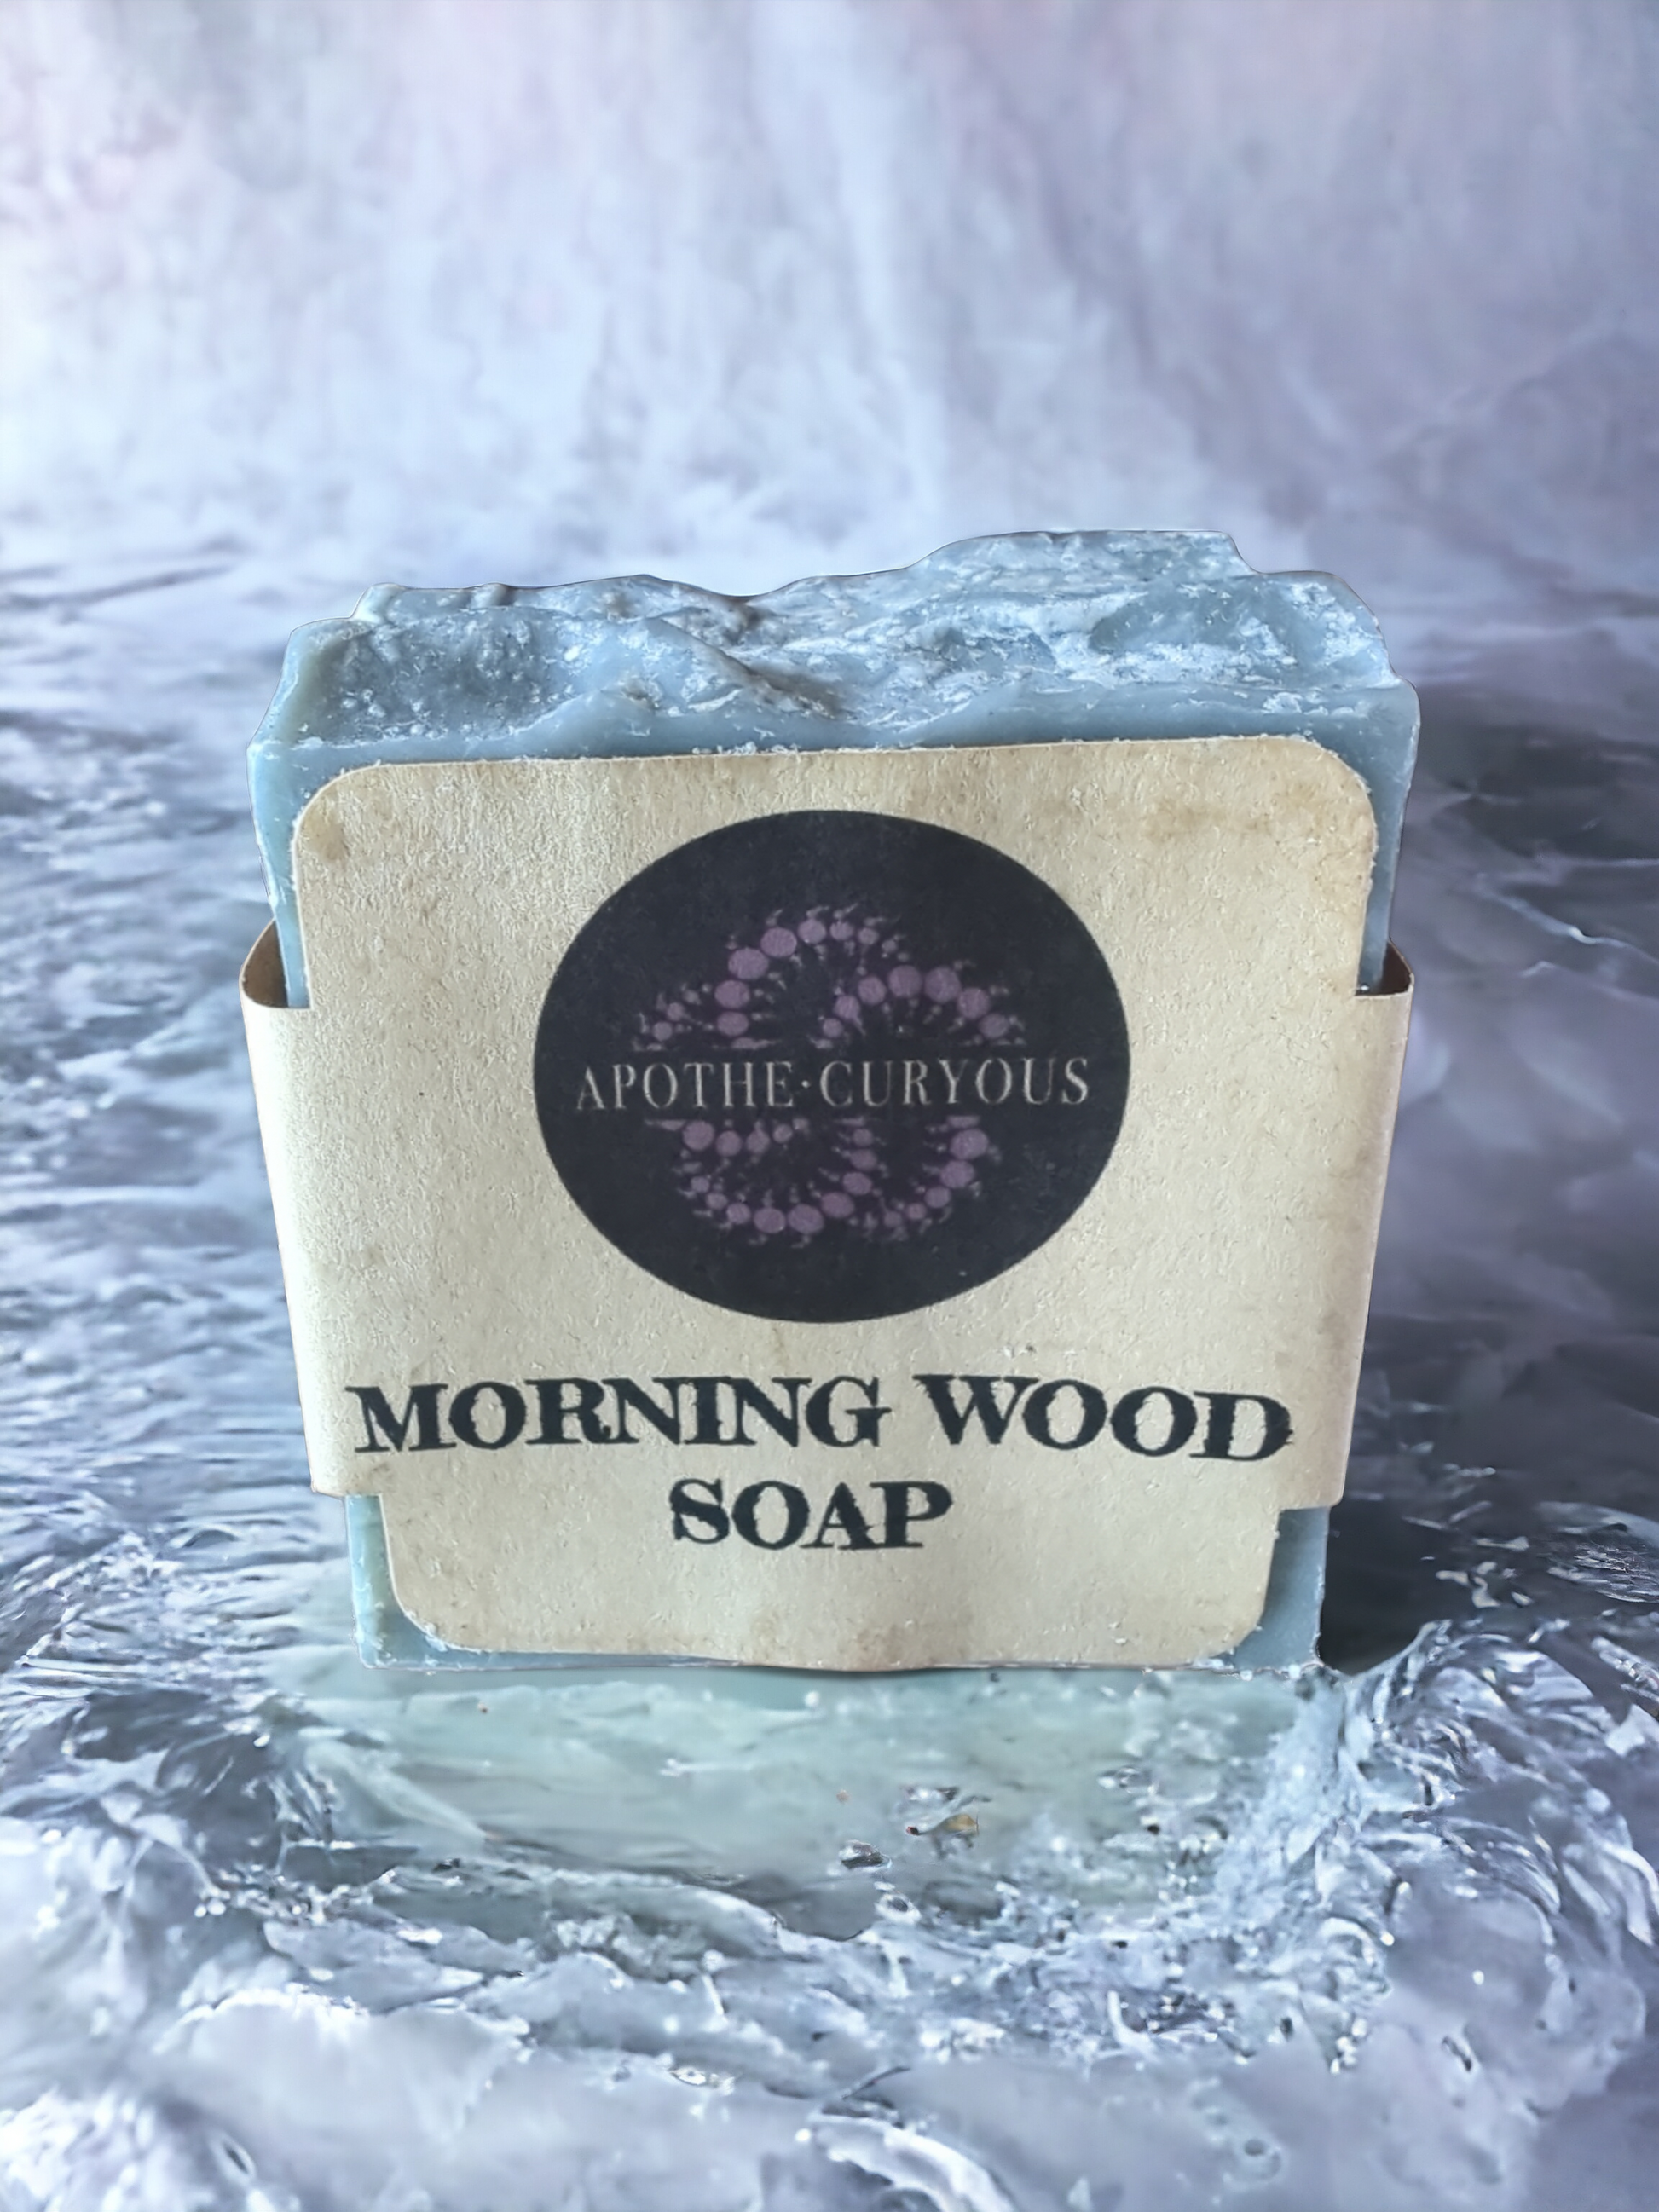 Morning Wood soap, Apothecuryous